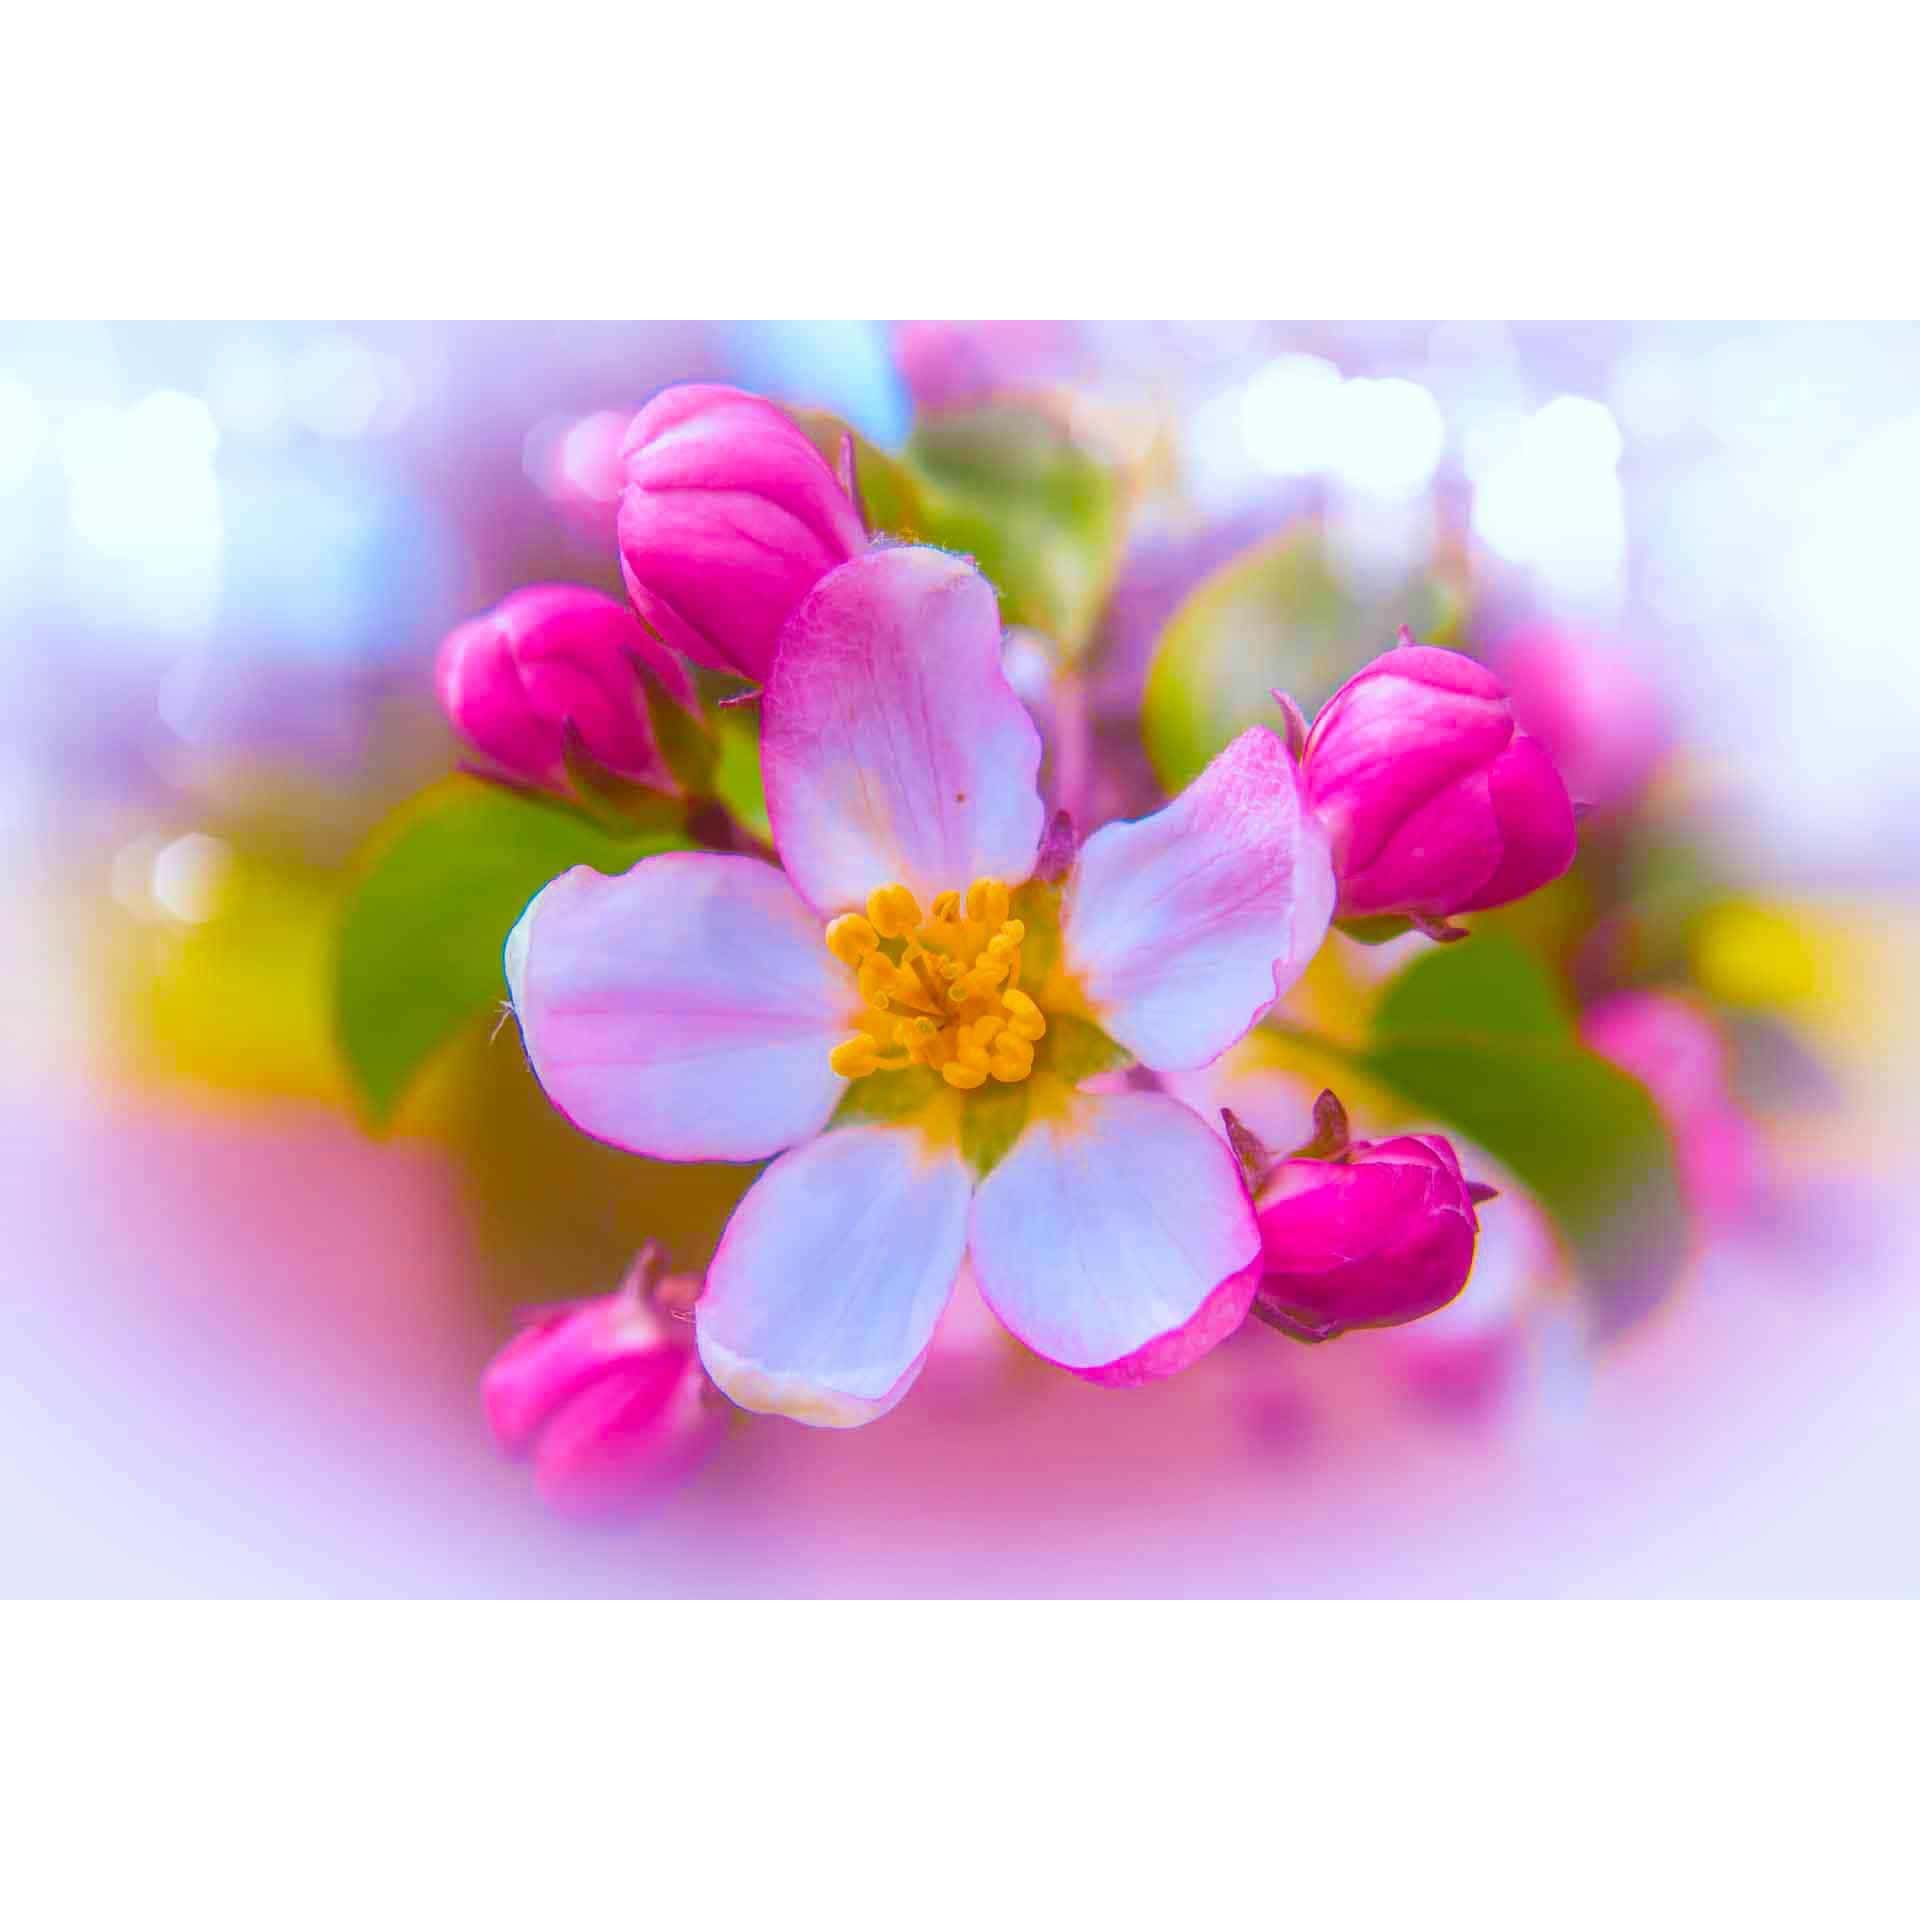 Diamond Painting - Kirschblüte und Knospen - gedruckt in Ultra-HD - Blumen, Horizontal